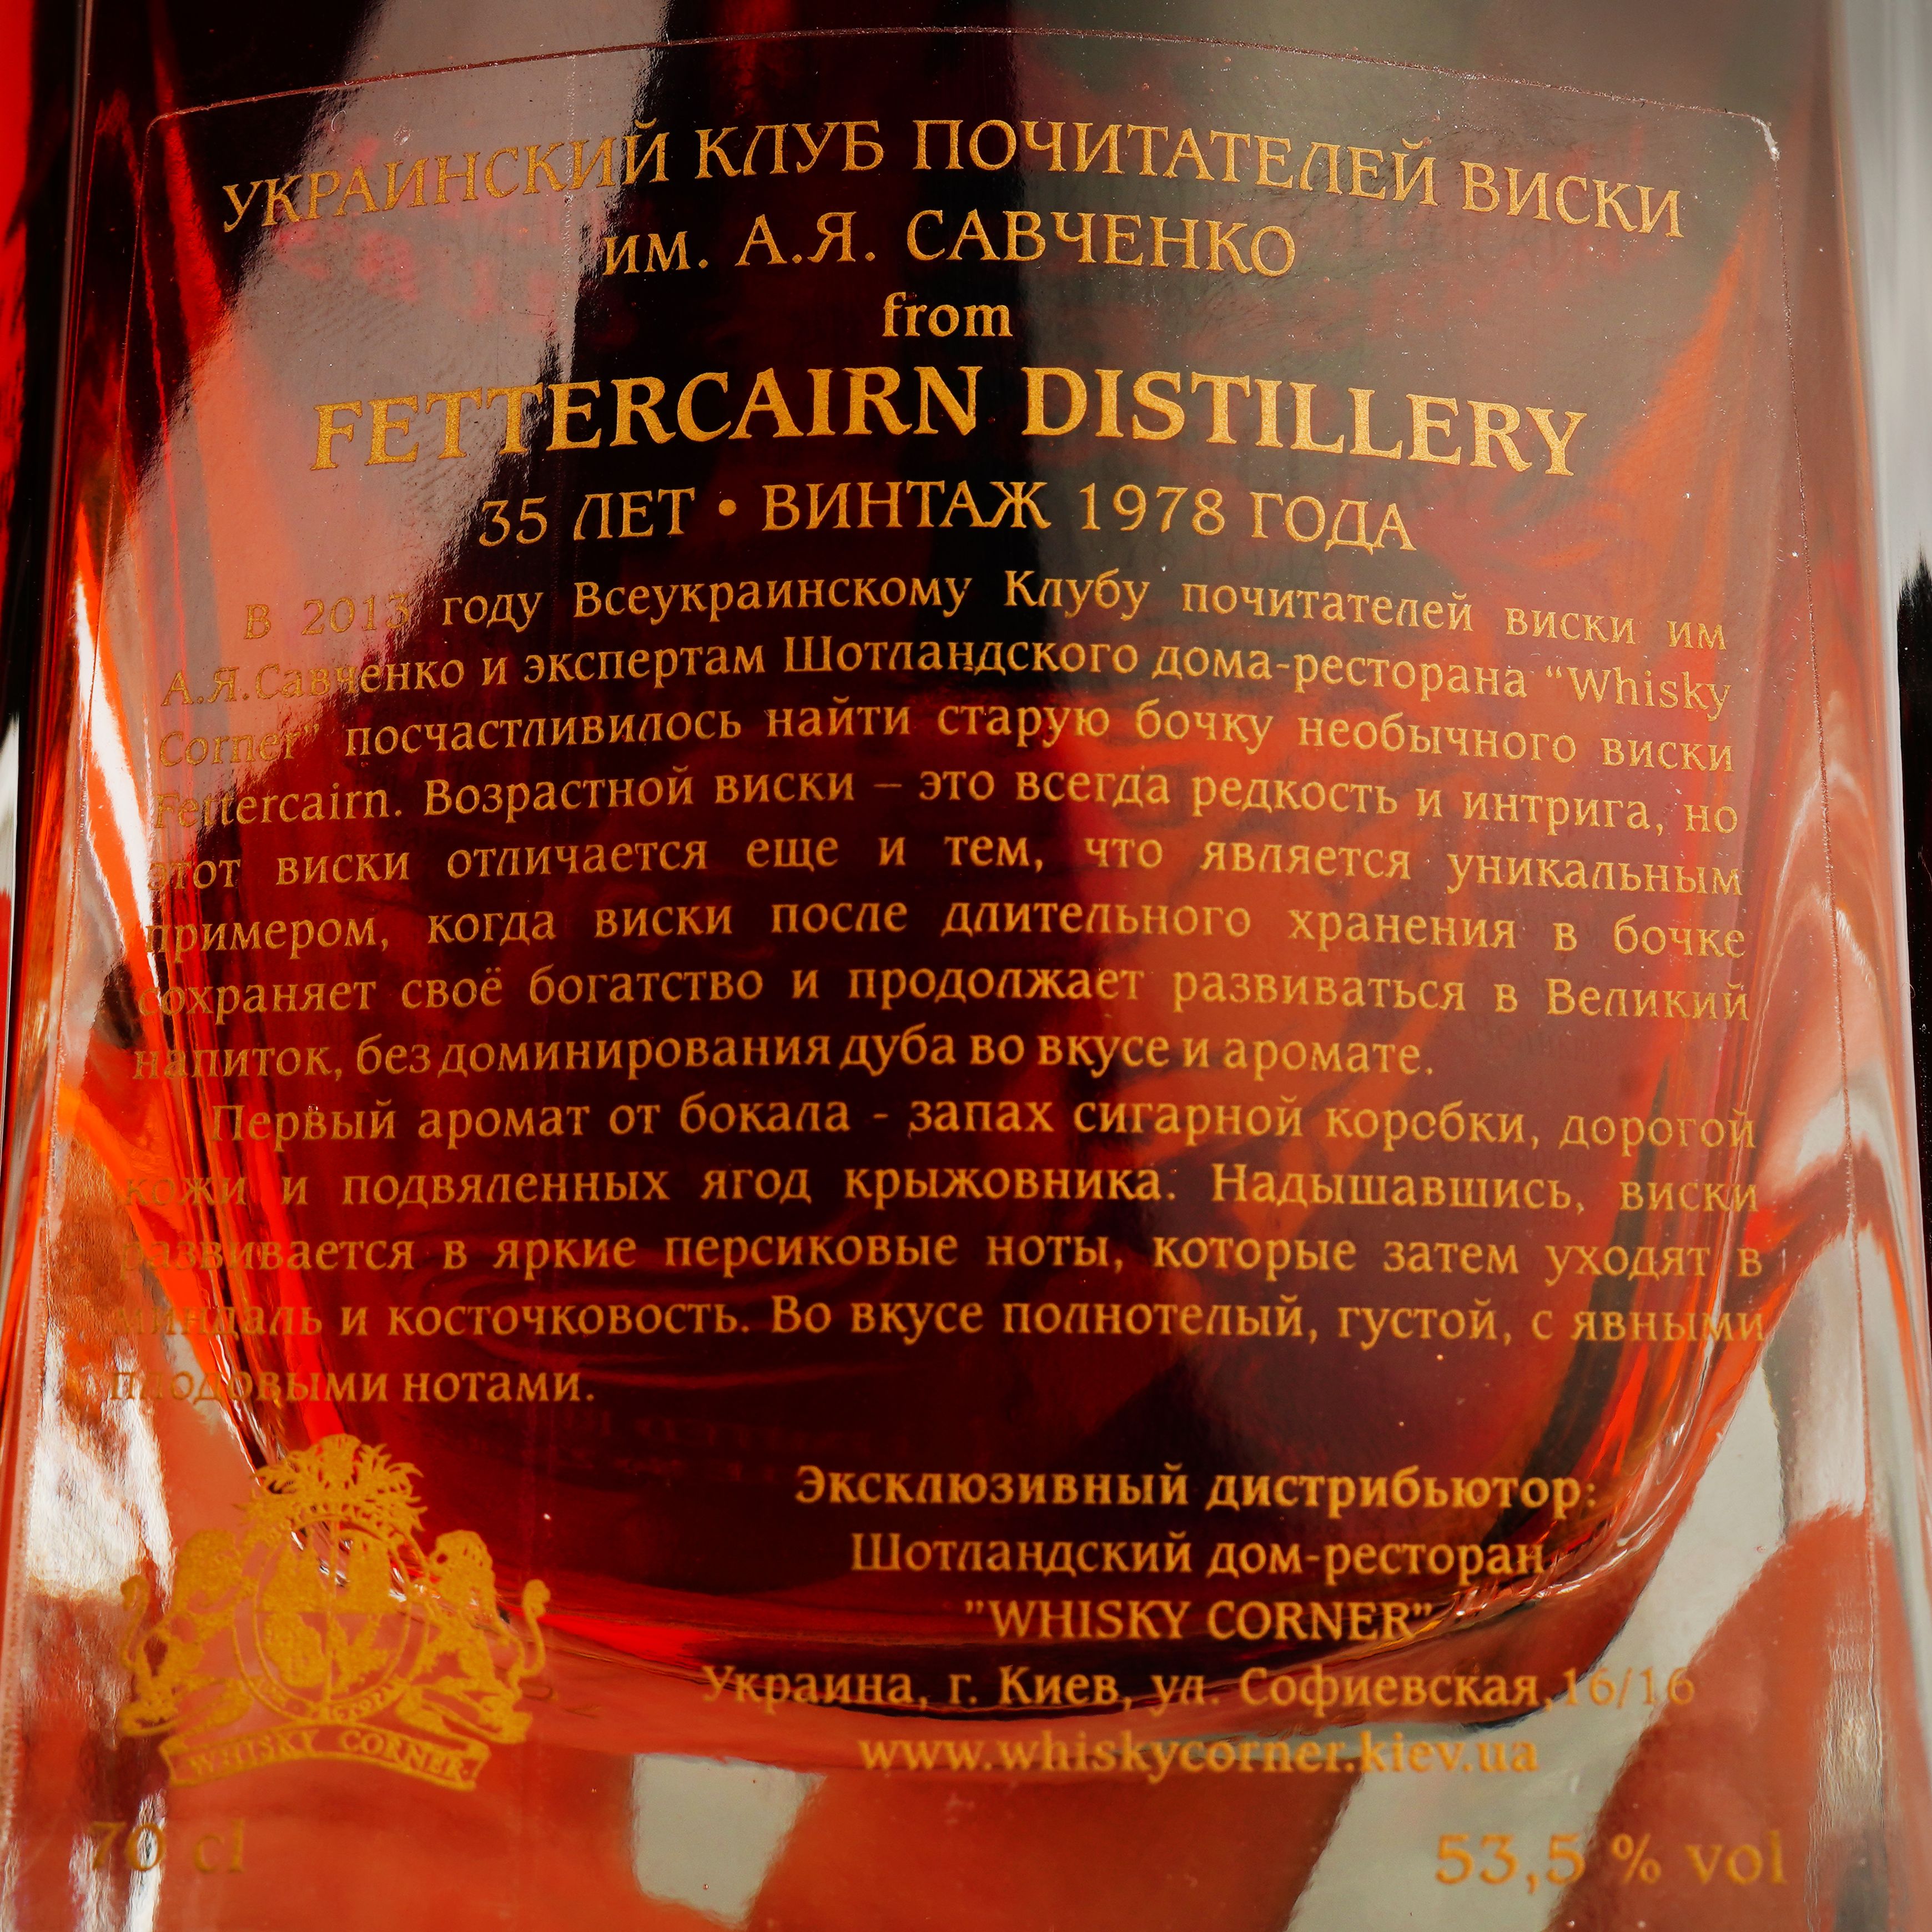 Виски Fettercairn 35 Years Old 1978 Single Malt Scotch Whisky 53.5% 0.7 л в подарочной упаковке - фото 7